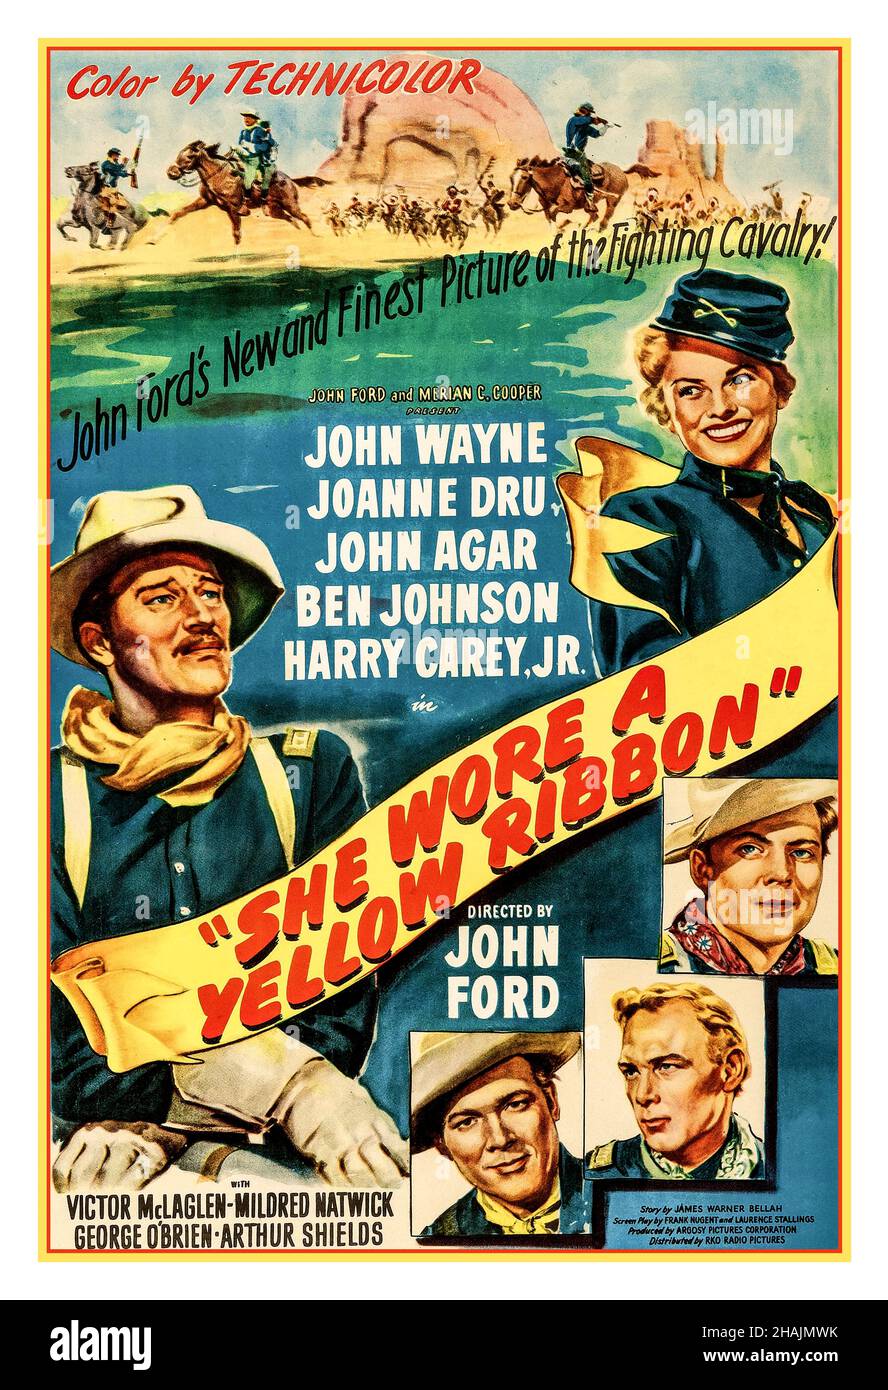 SHE WORE A YELLOW RIBBON Vintage Movie Film Poster 'She Wore a Yellow Ribbon' starring John Wayne, directed by John Ford  John Wayne, Joanne Dru, John Agar, Ben Johnson, Harry Carey, Jr., 1949. Stock Photo